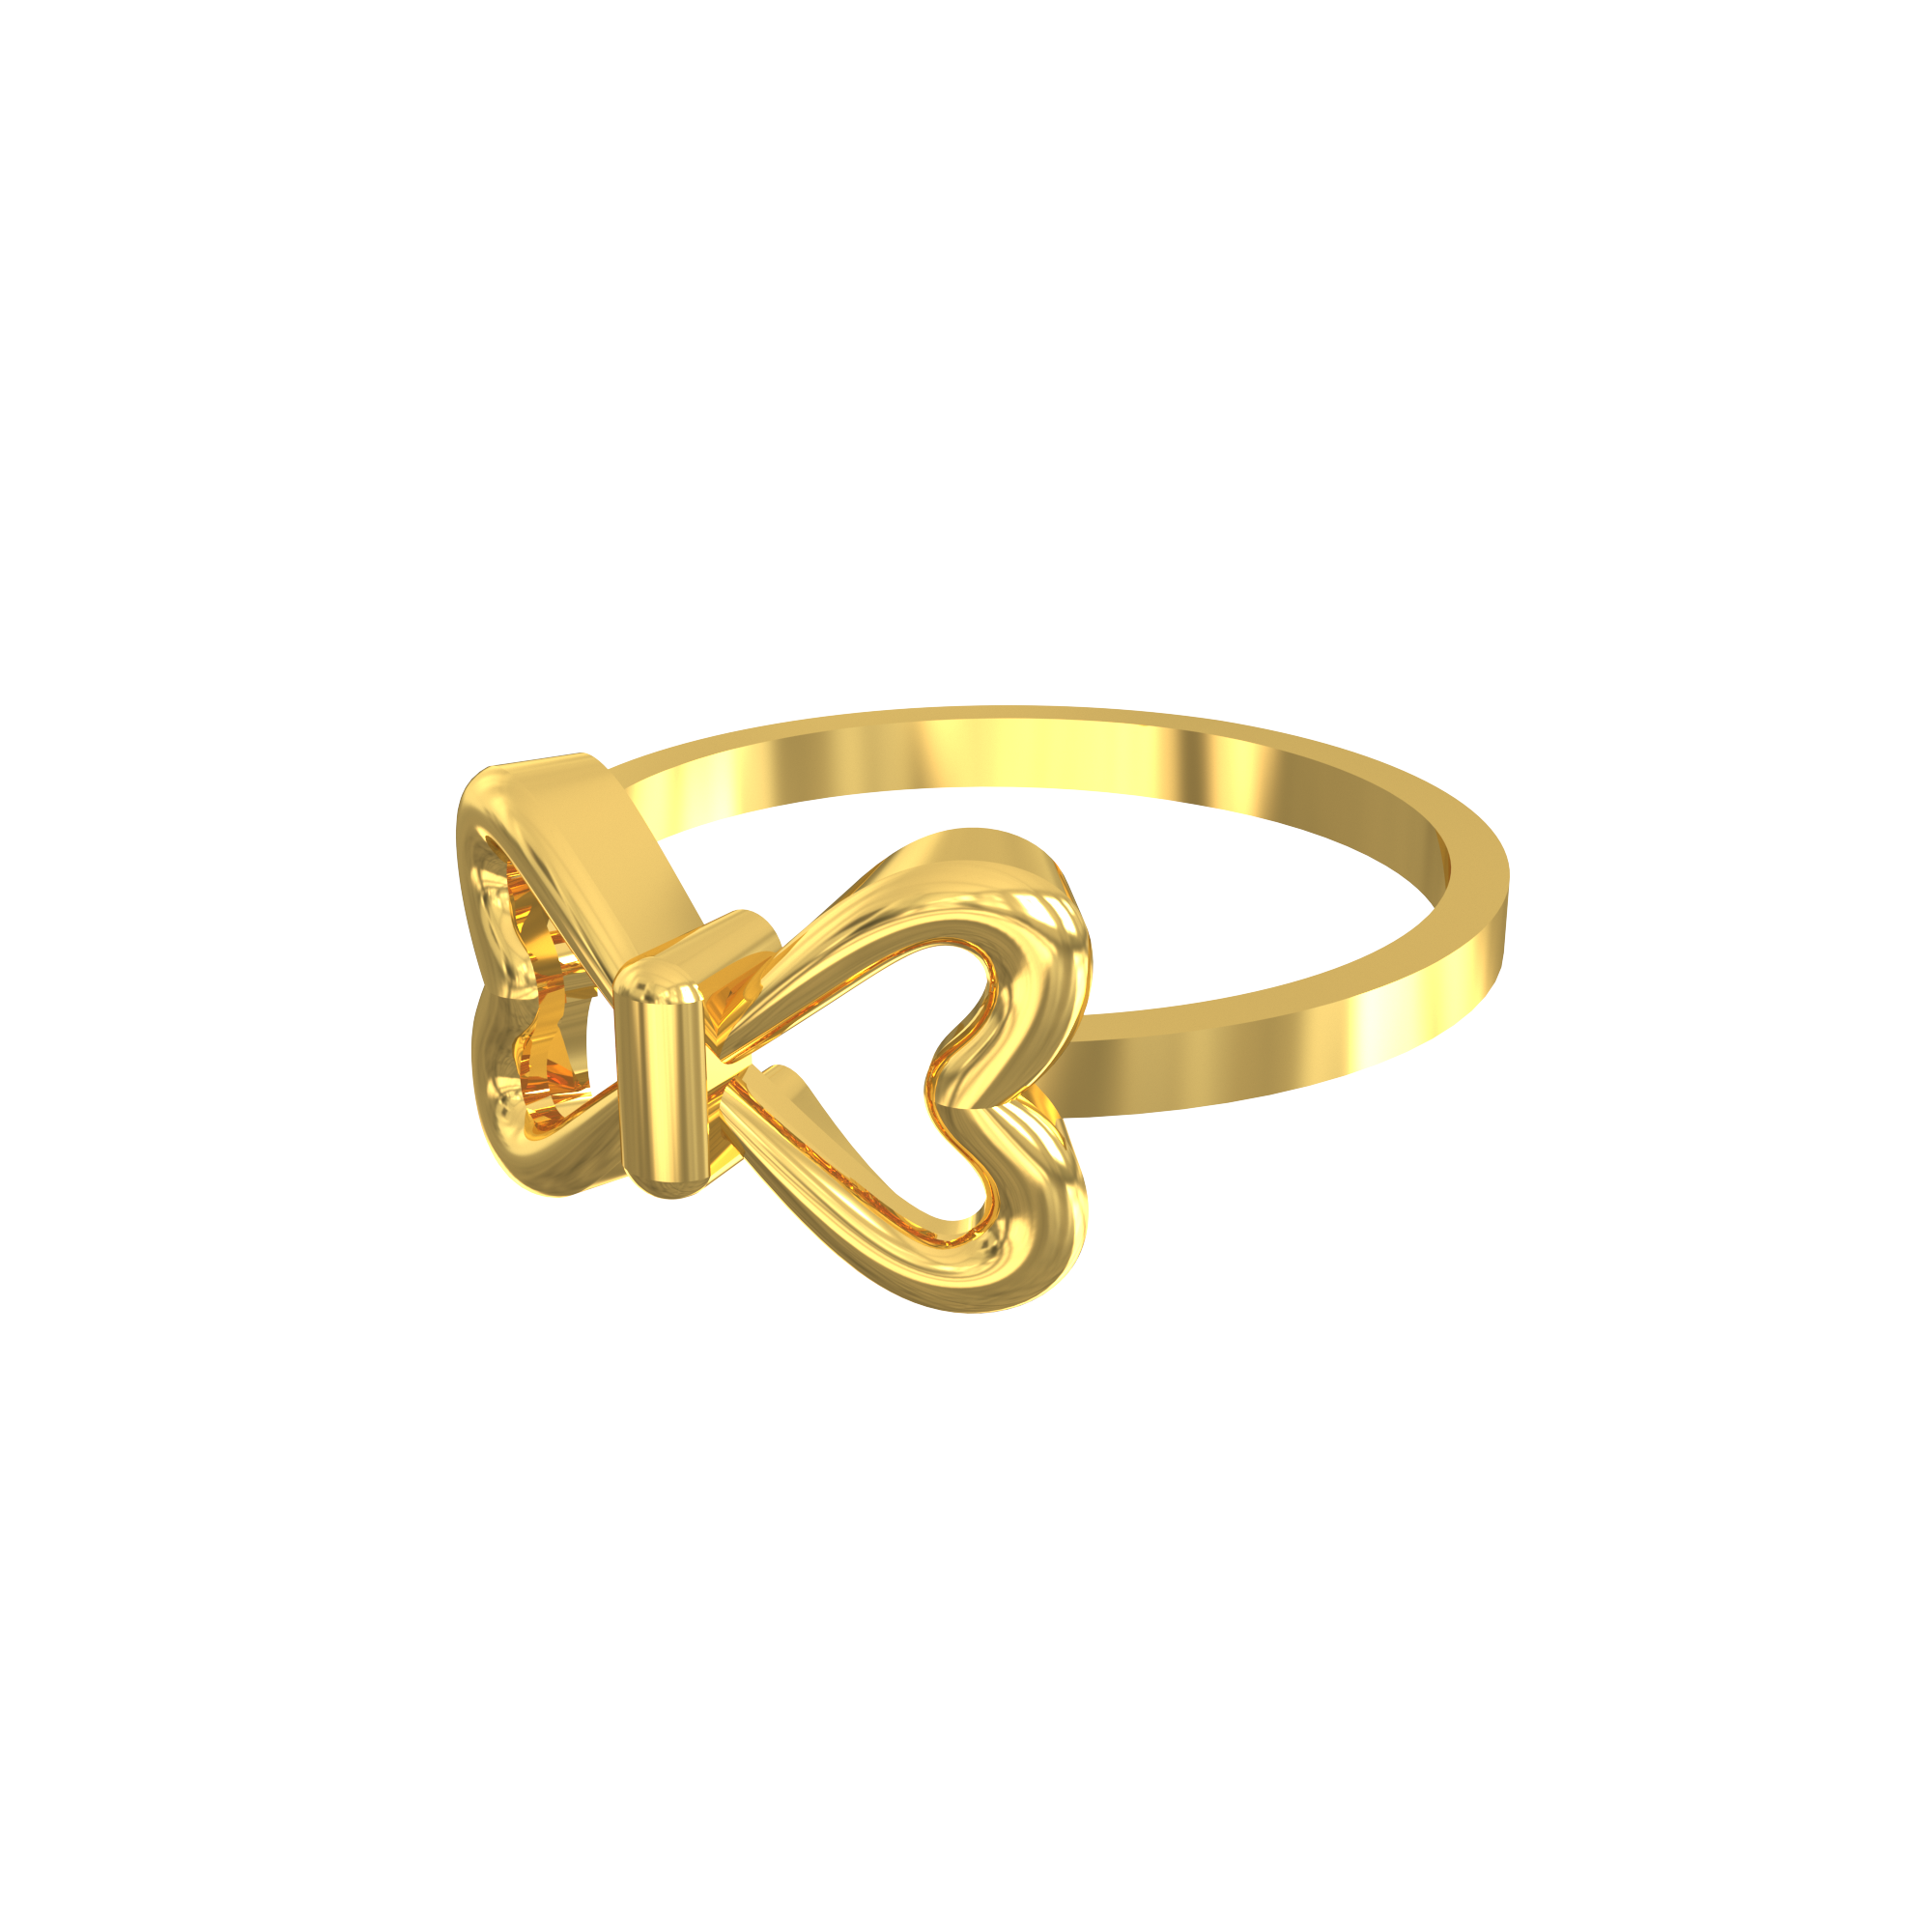 Saudi Arabia Gold Wedding Ring Price| Alibaba.com